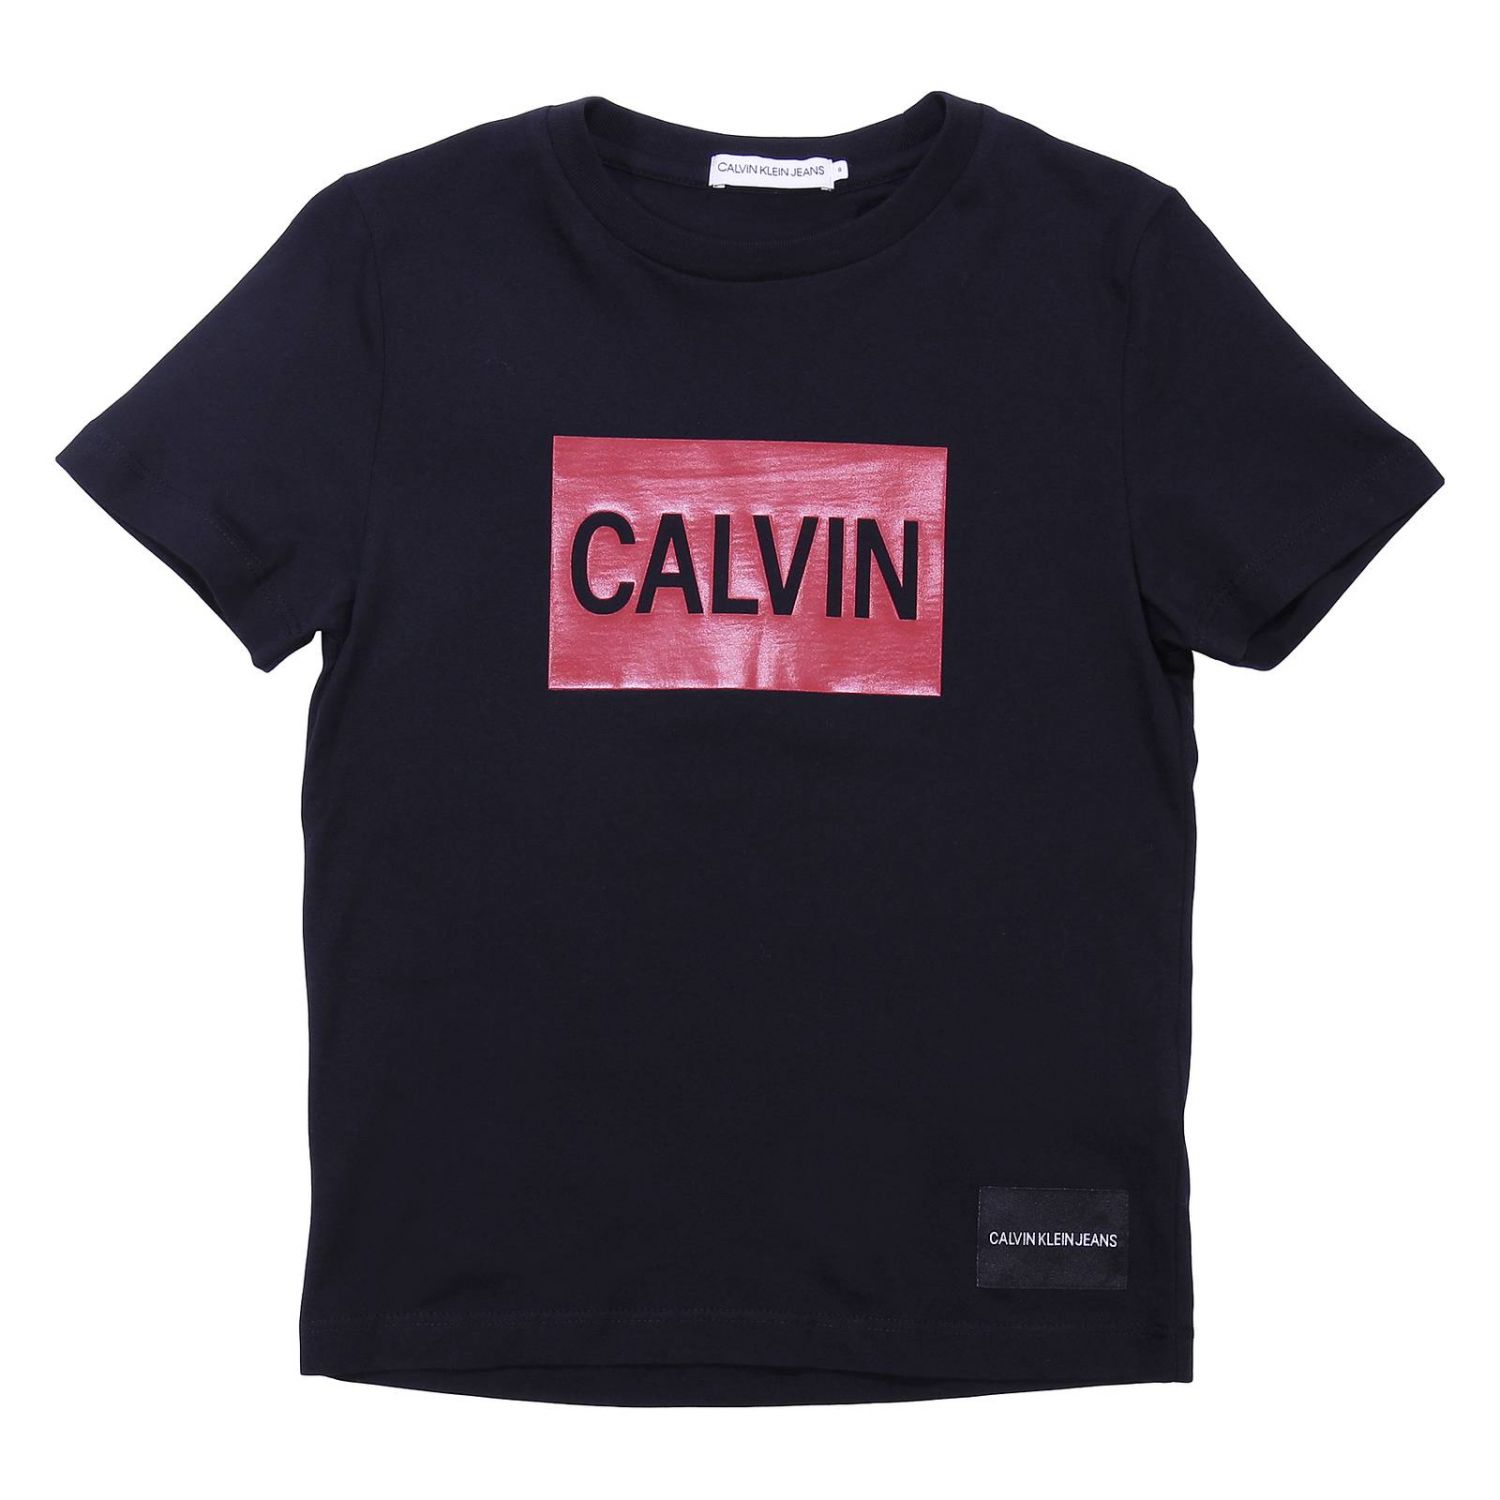 Calvin Klein Outlet: t-shirt for boys - Black | Calvin Klein t-shirt ...